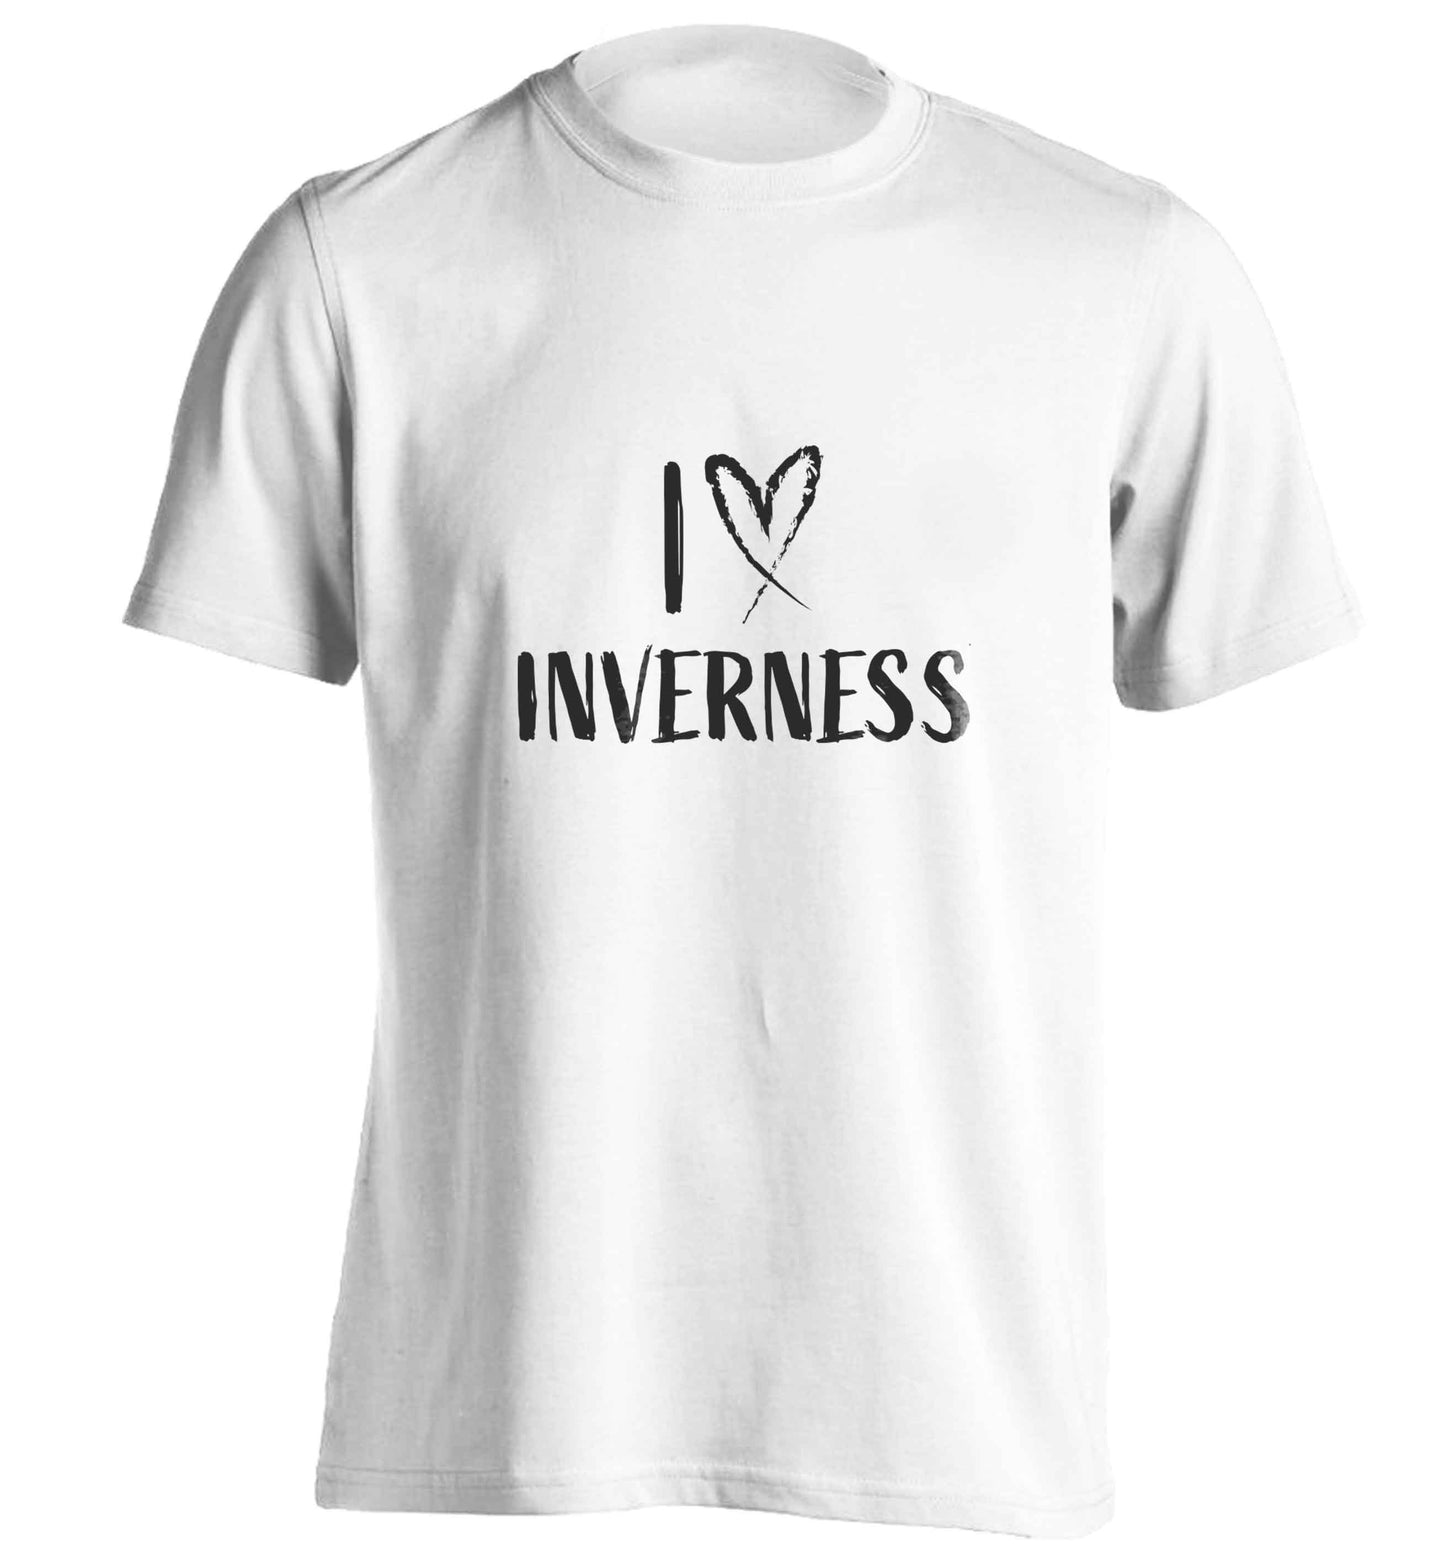 I love Inverness adults unisex white Tshirt 2XL